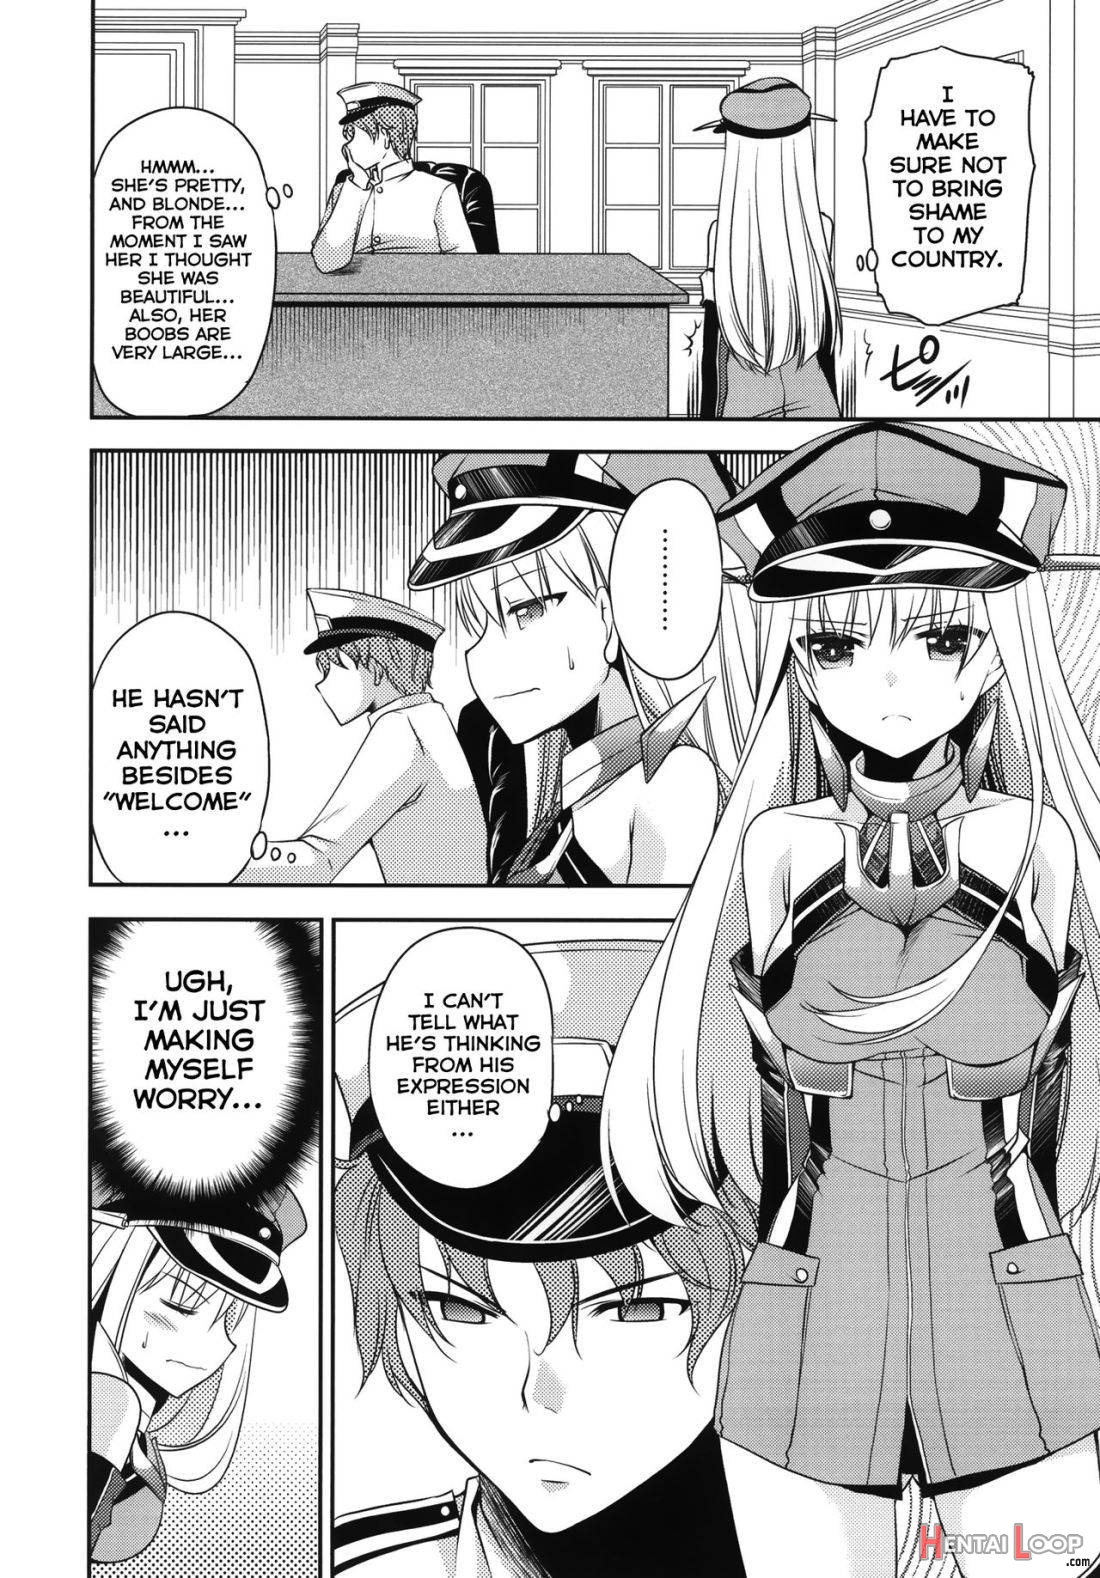 Omorashi Bismarck page 3